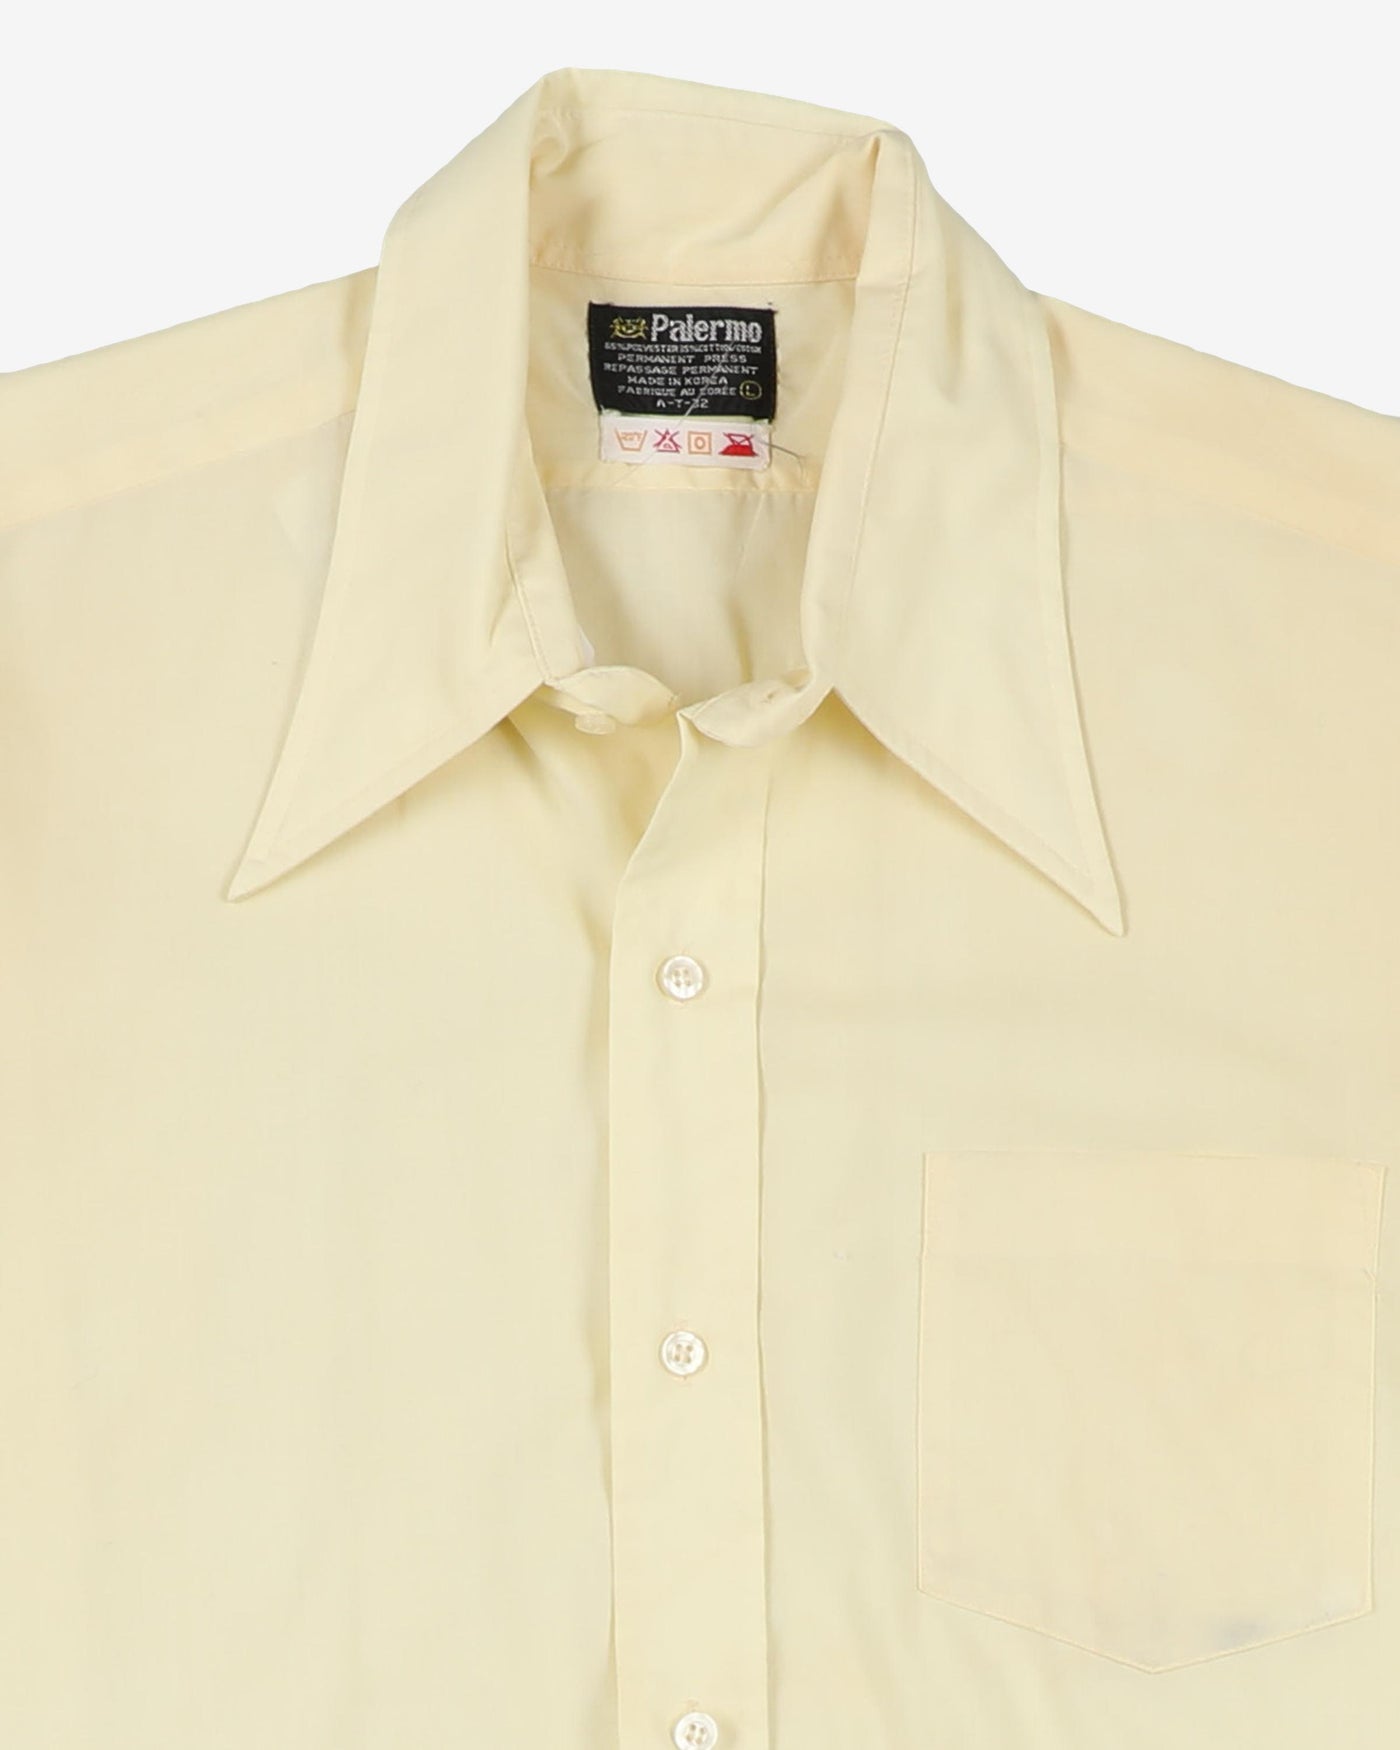 1970's Palermo yellow shirt - L